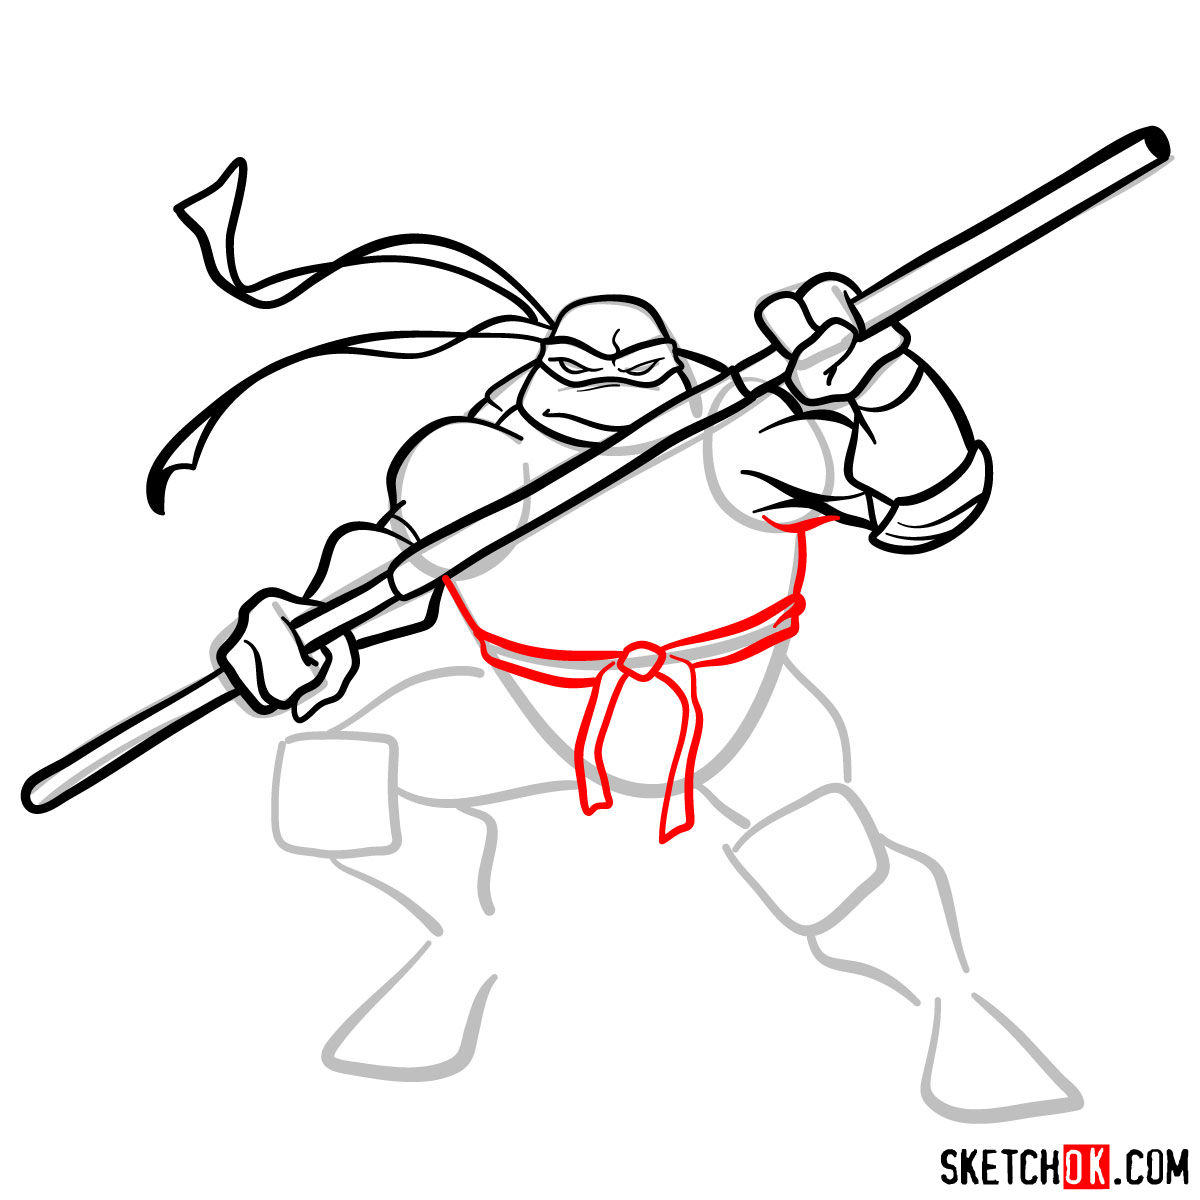 How to draw Donatello ninja turtle - step 09